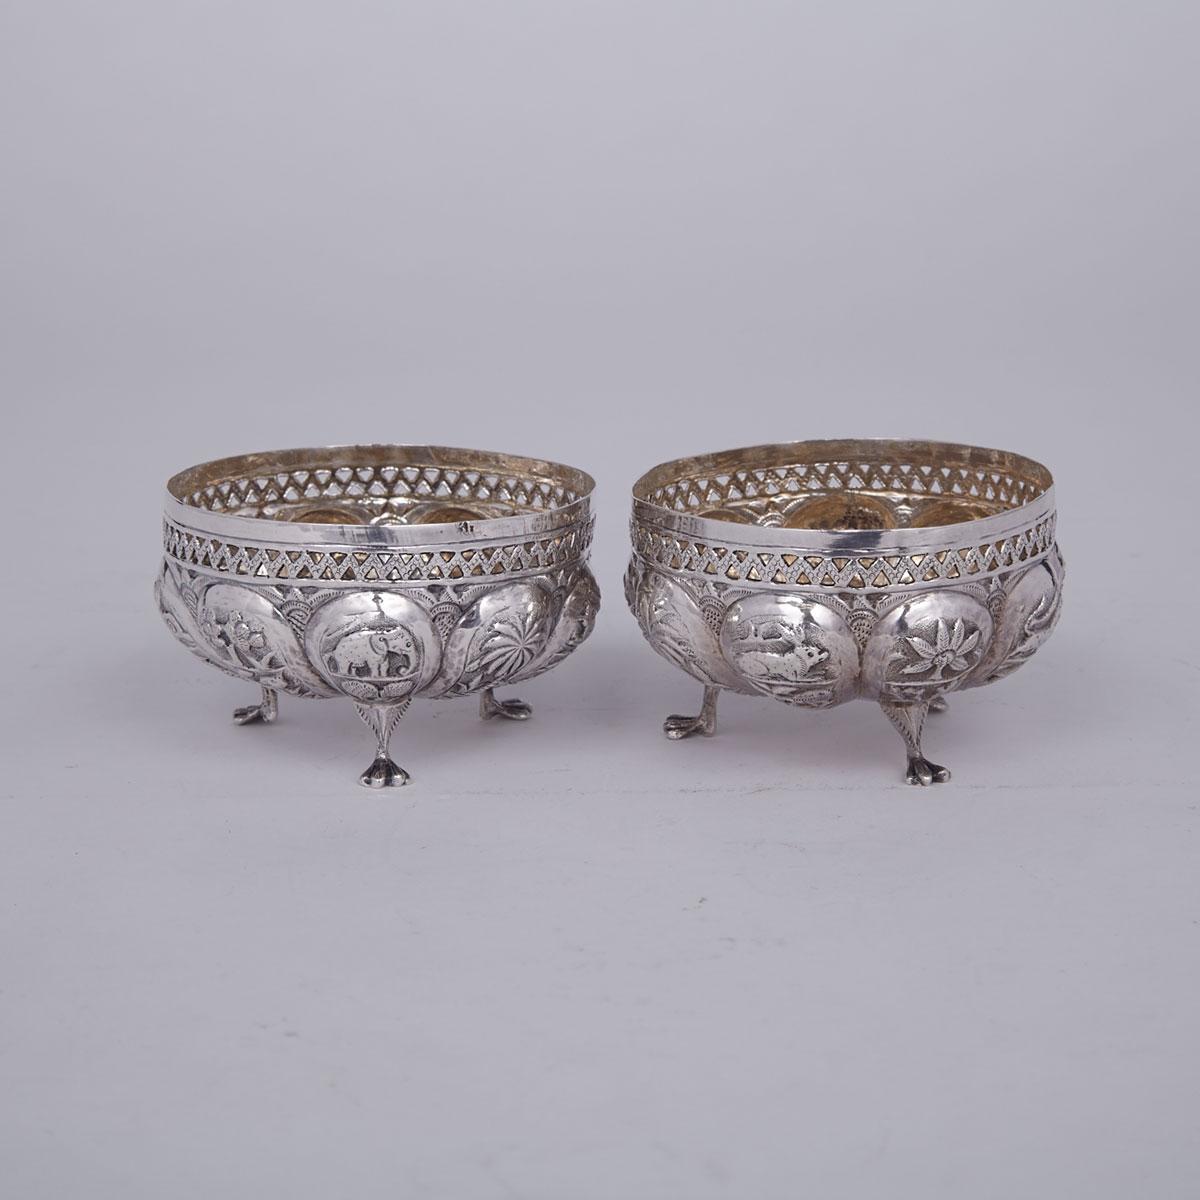 Pair of Burmese Silver Small Bowls, c.1900